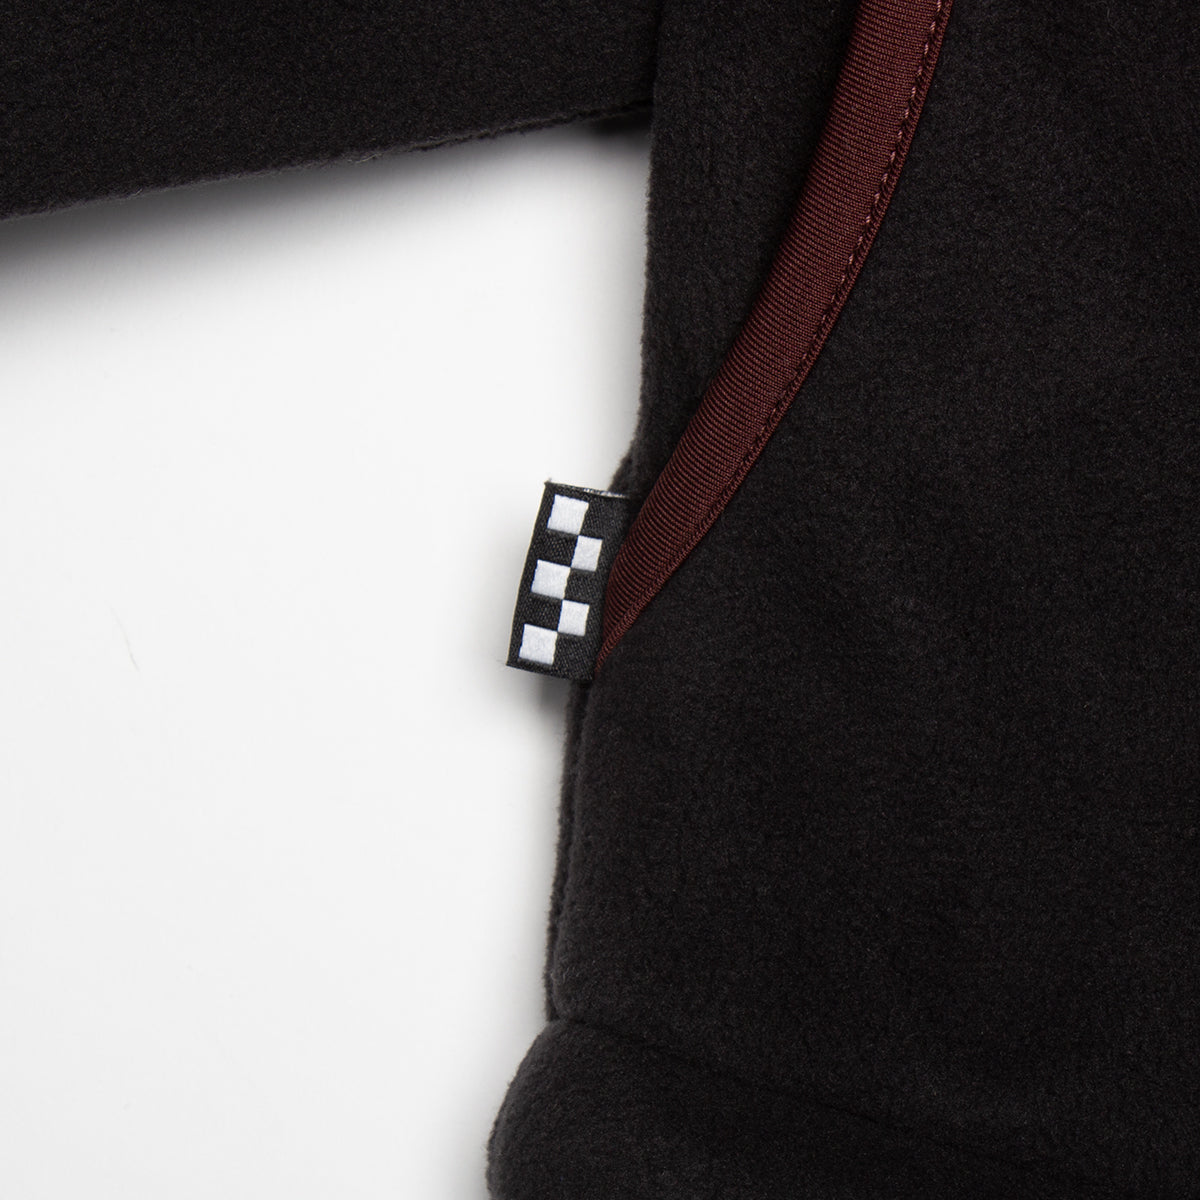 Vans | Zorilla Half-Zip Fleece Style # VN000F6SBLK1 Color : Black